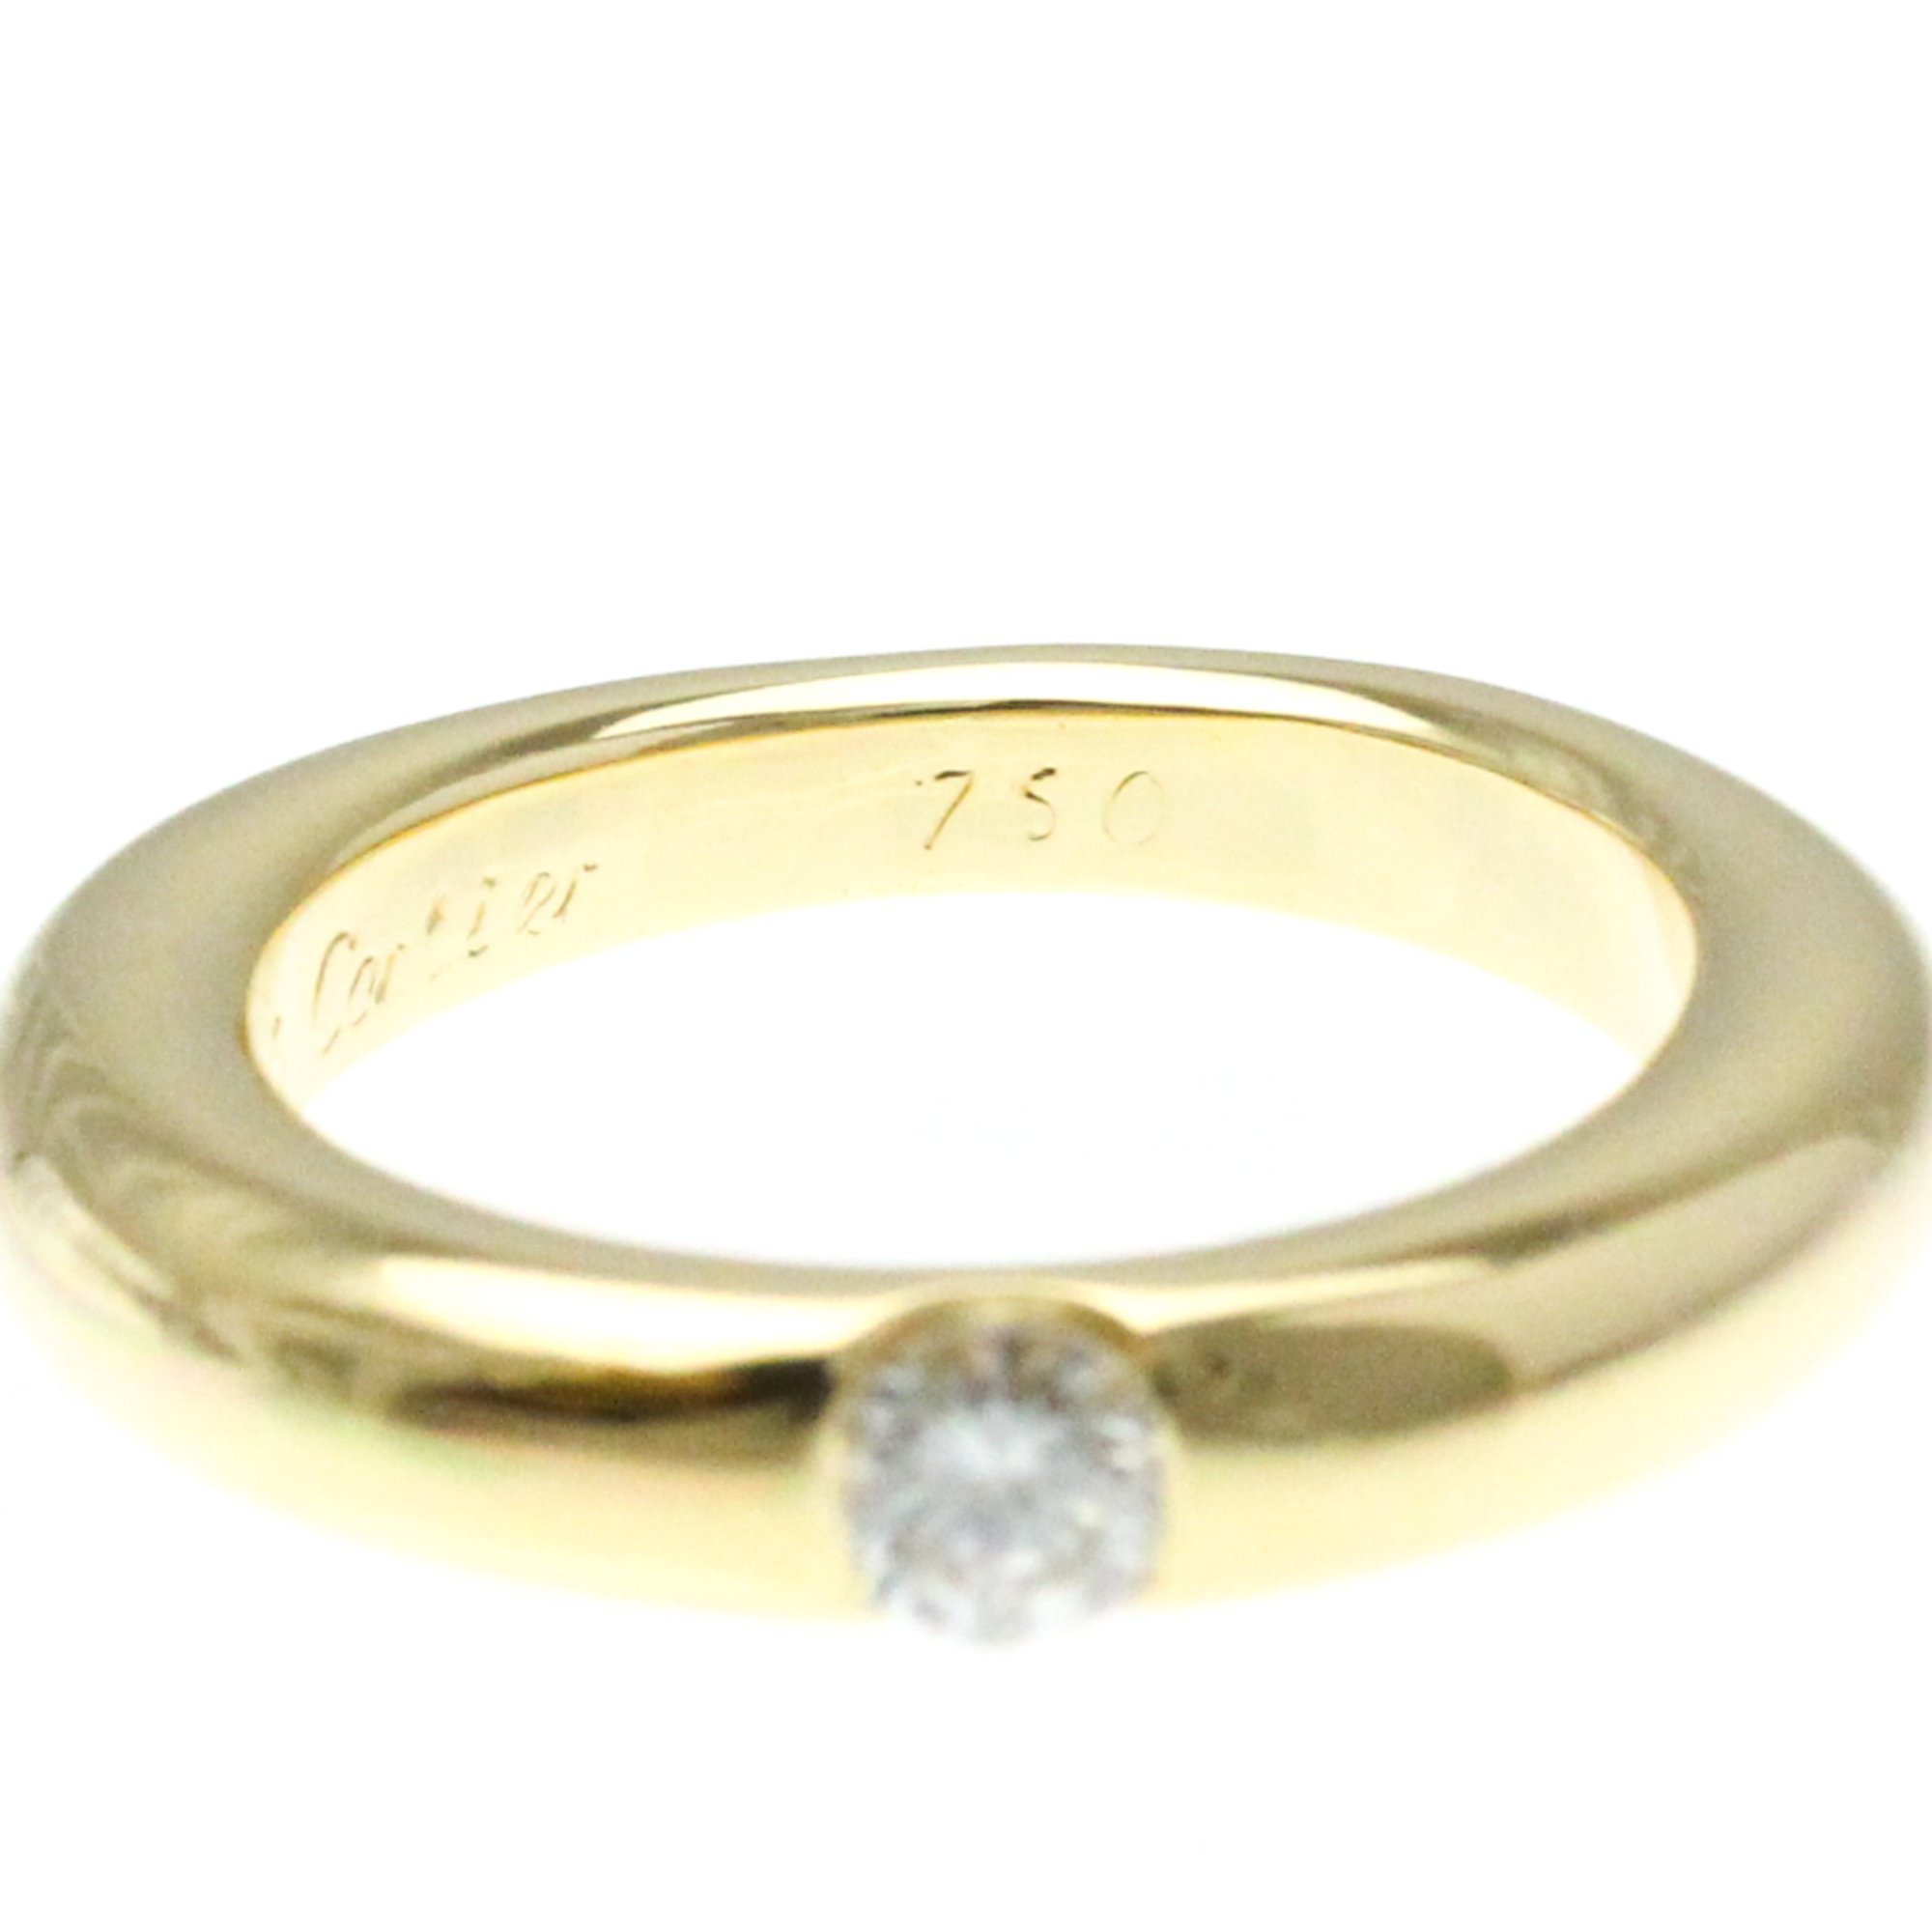 Cartier Ellipse Ring Yellow Gold (18K) Diamond Band Ring Carat/0 BF573130